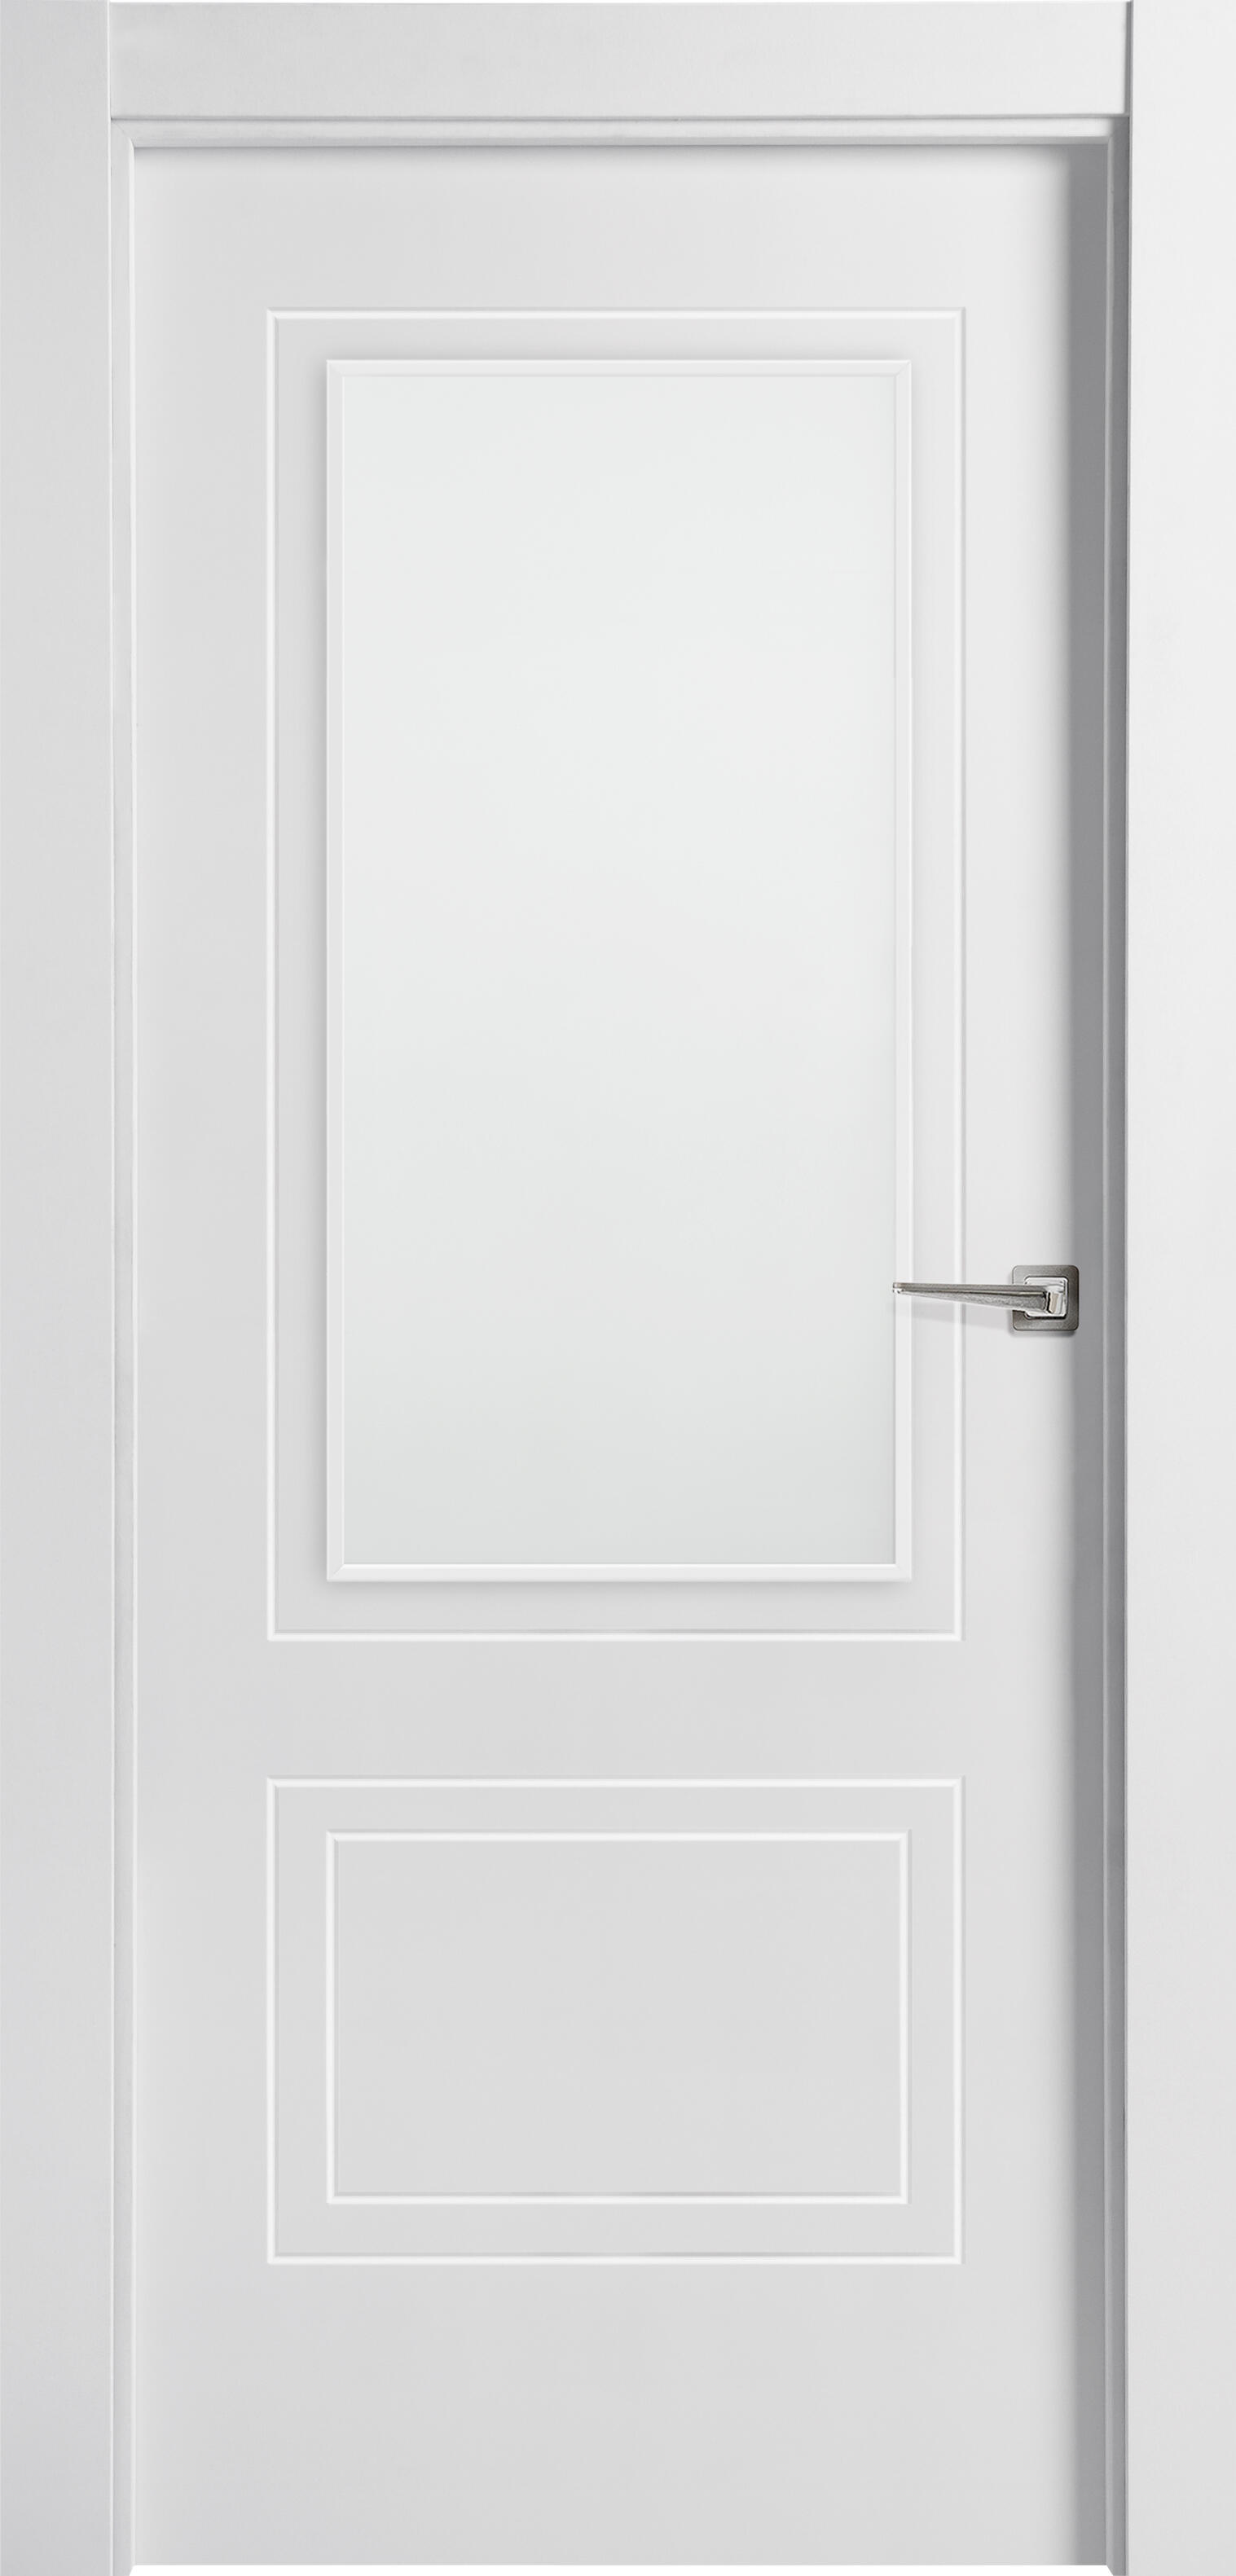 Puerta boston blanco de apertura izquierdacon cristal 11x 72.5 cm